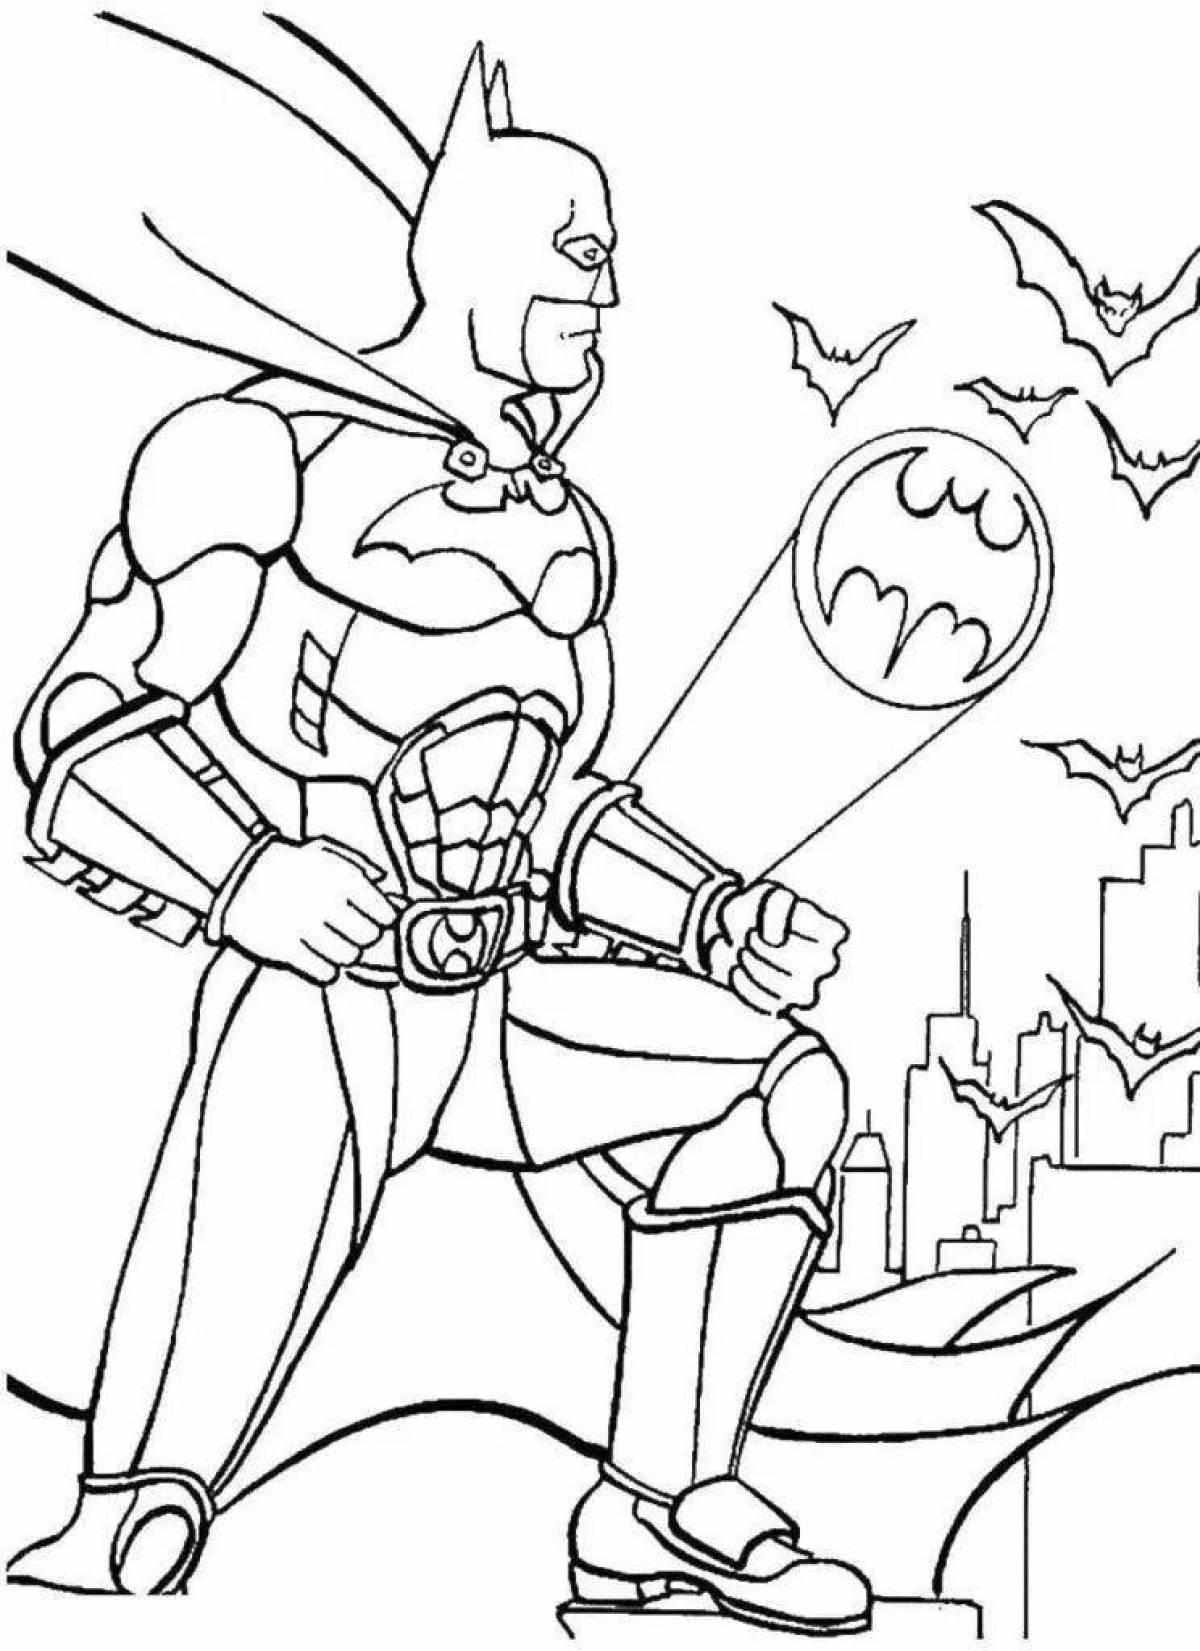 Innovative batman coloring